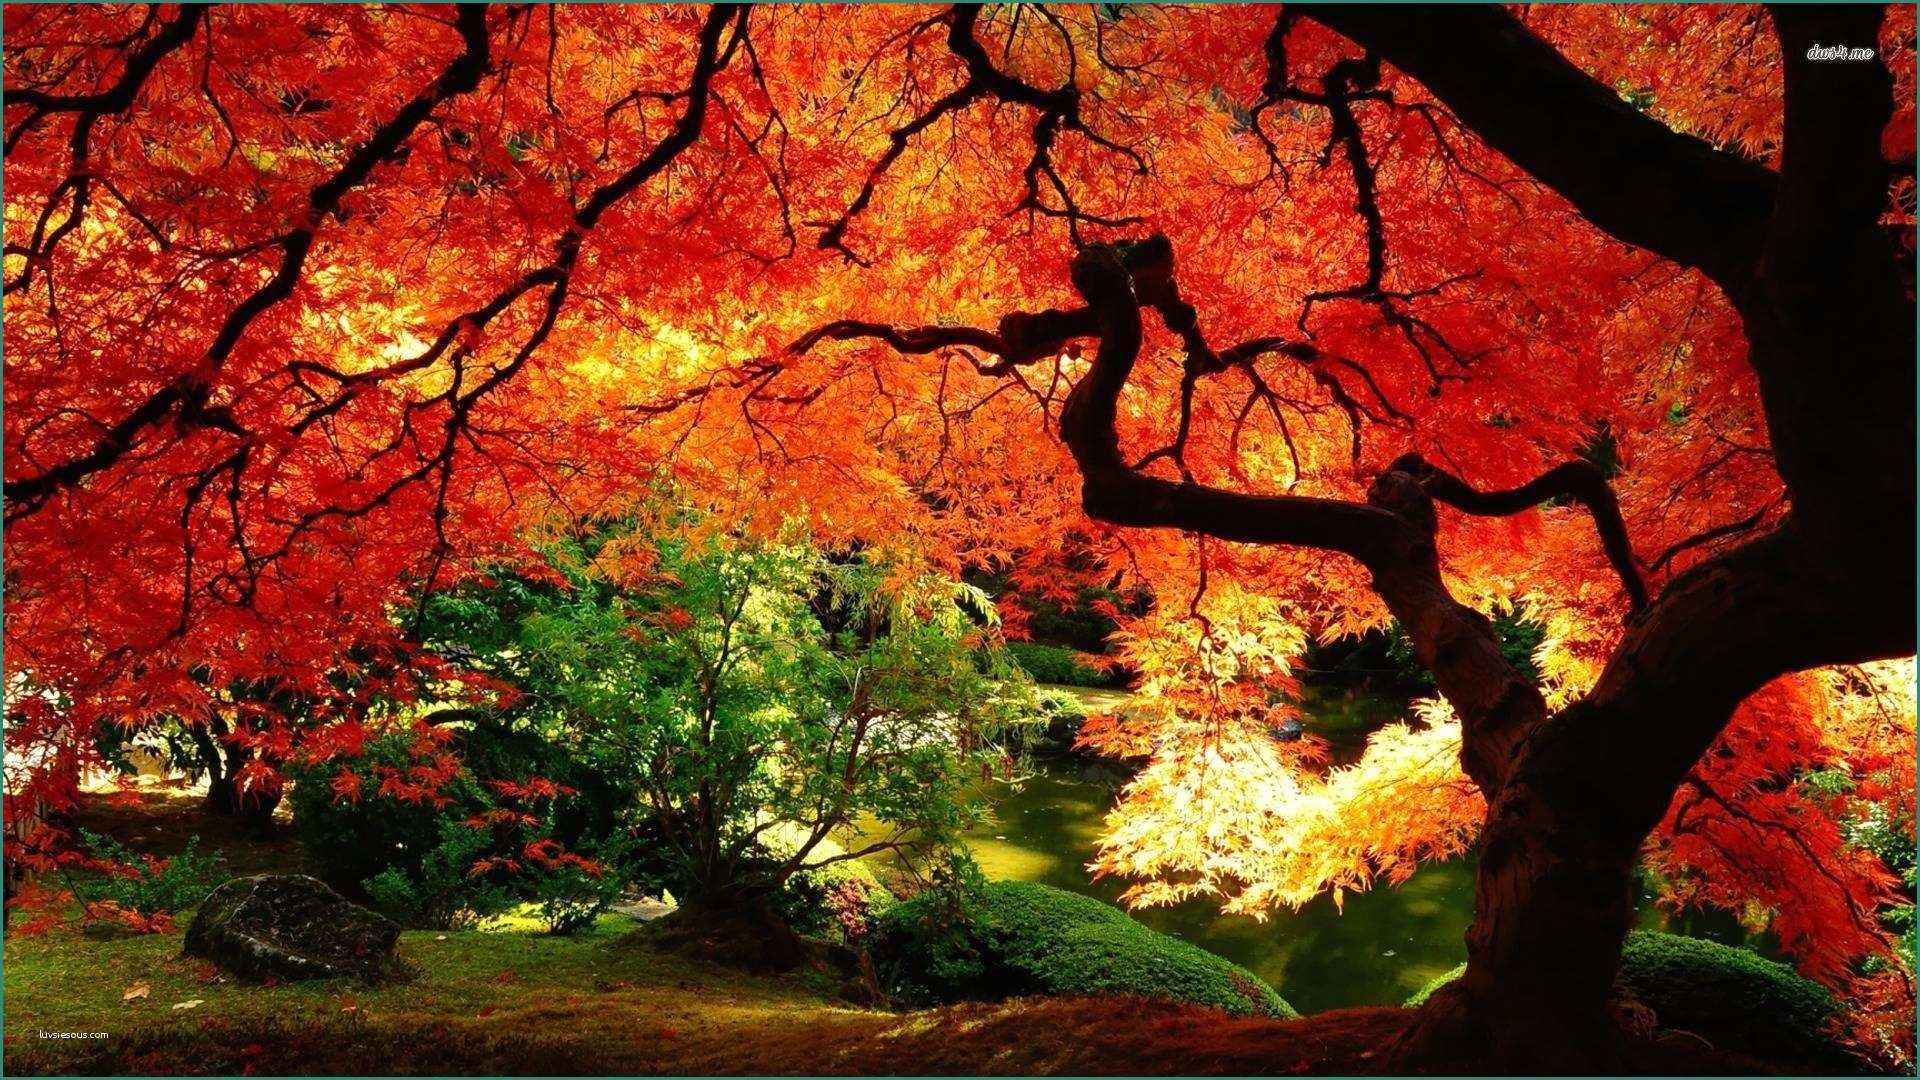 Foto Di Paesaggi Autunnali E Beautiful Autumn Cover Wallpapers New Belle Foto Di Paesaggi